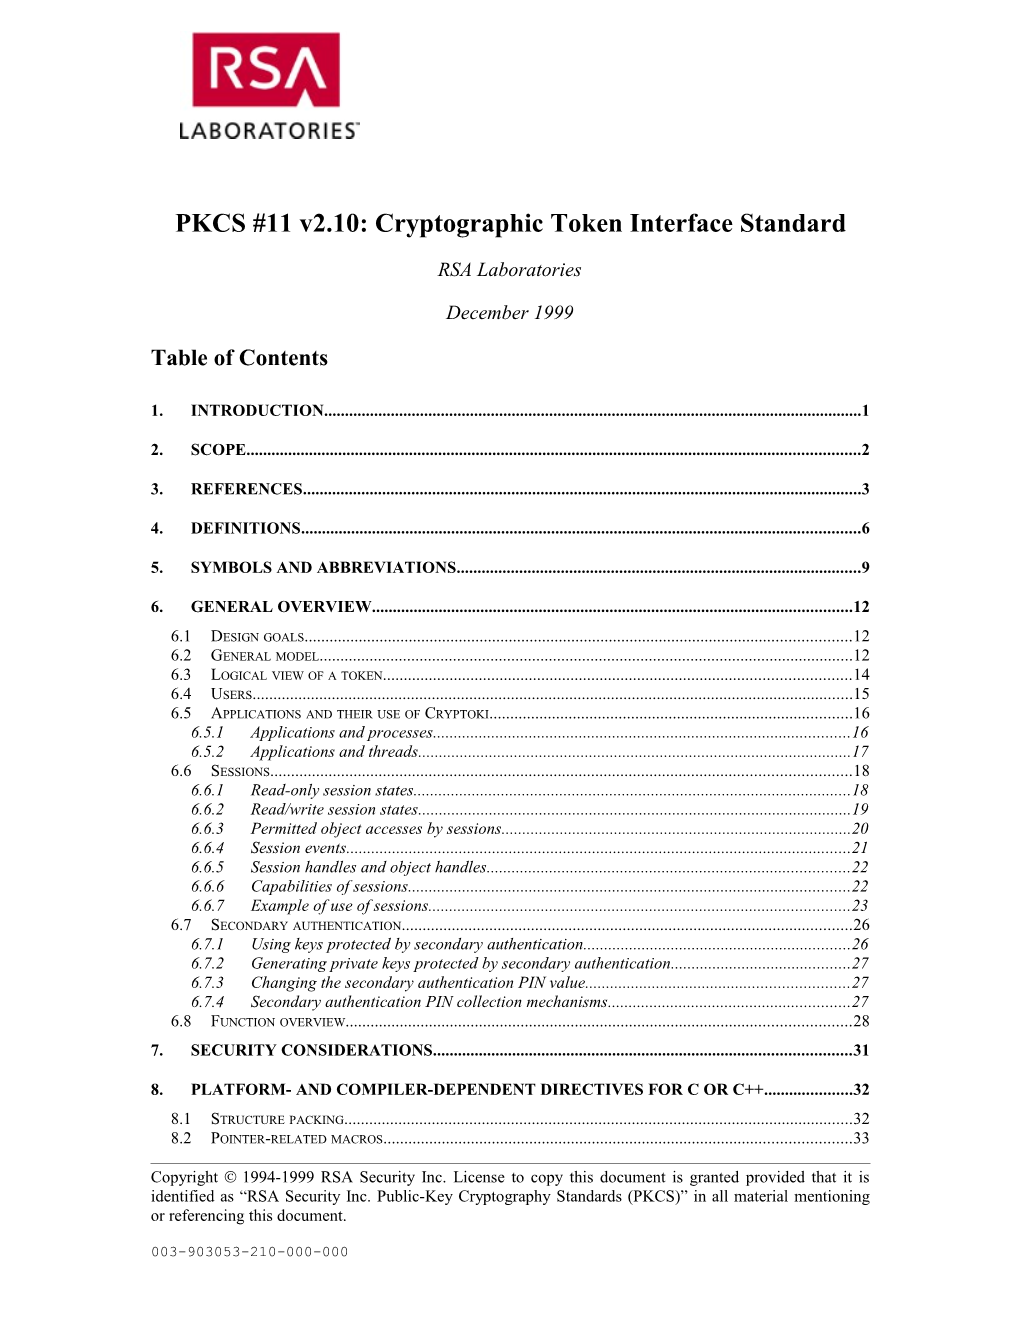 PKCS #11 V2.10: Cryptographic Token Interface Standard